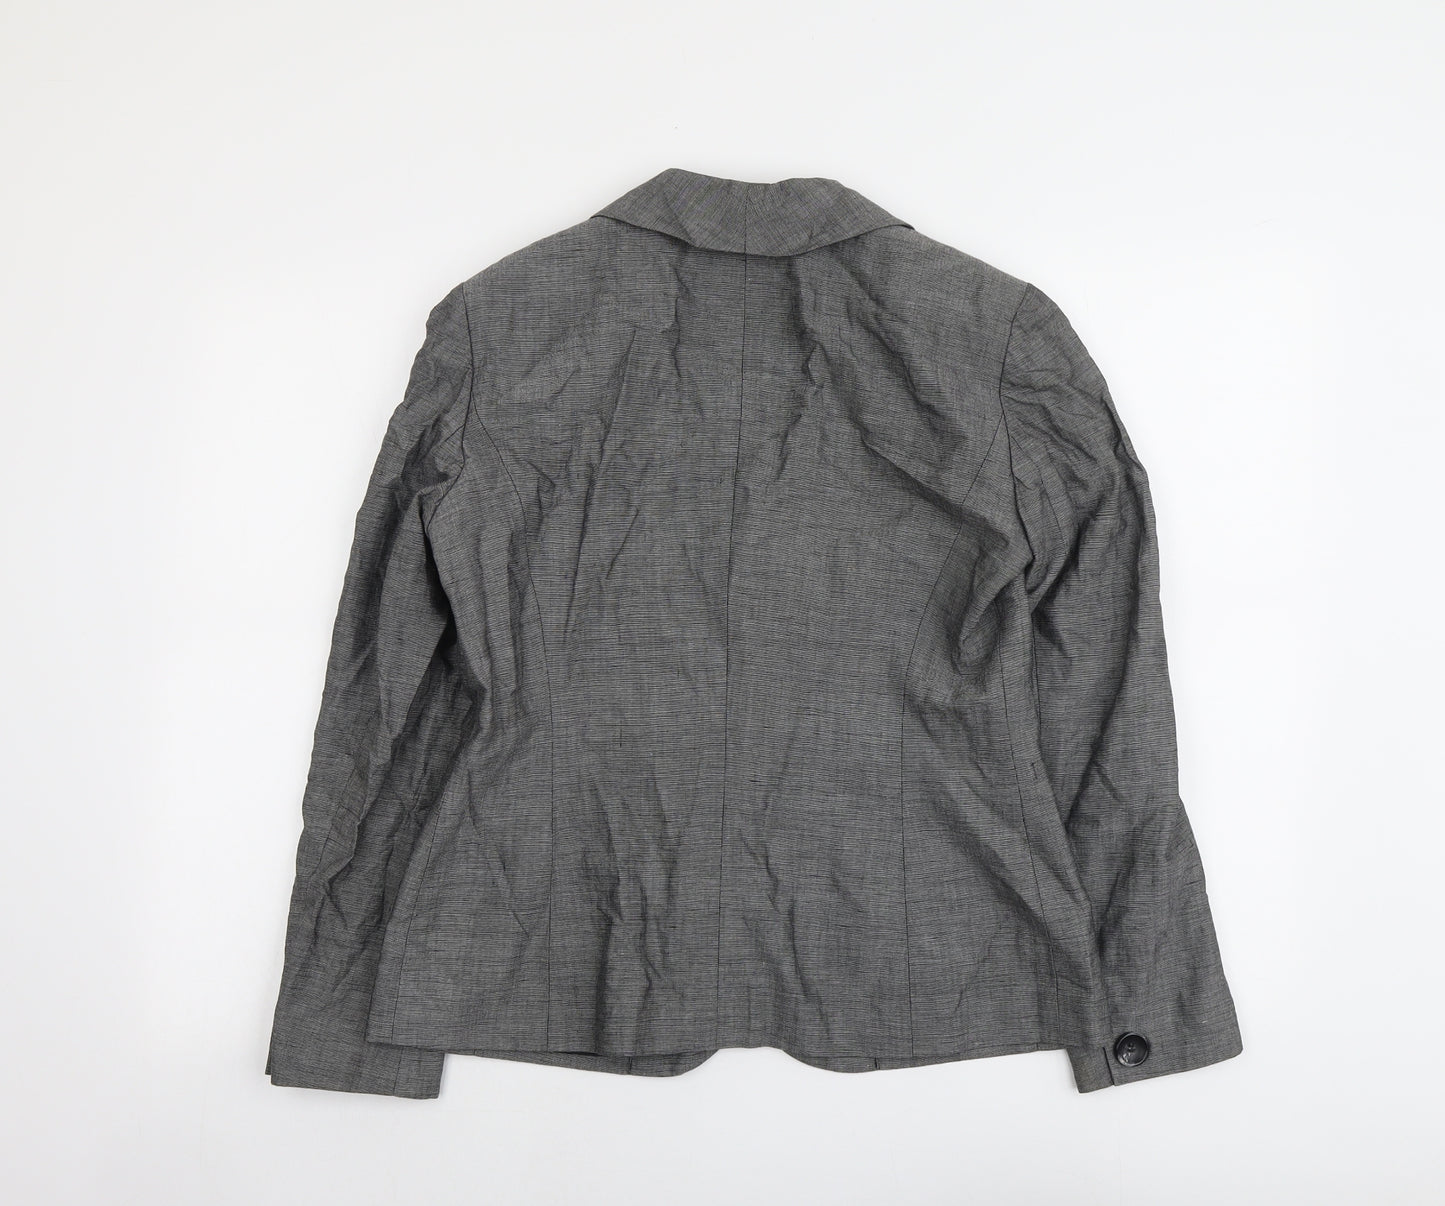 Jones New York Womens Grey Viscose Jacket Blazer Size 8